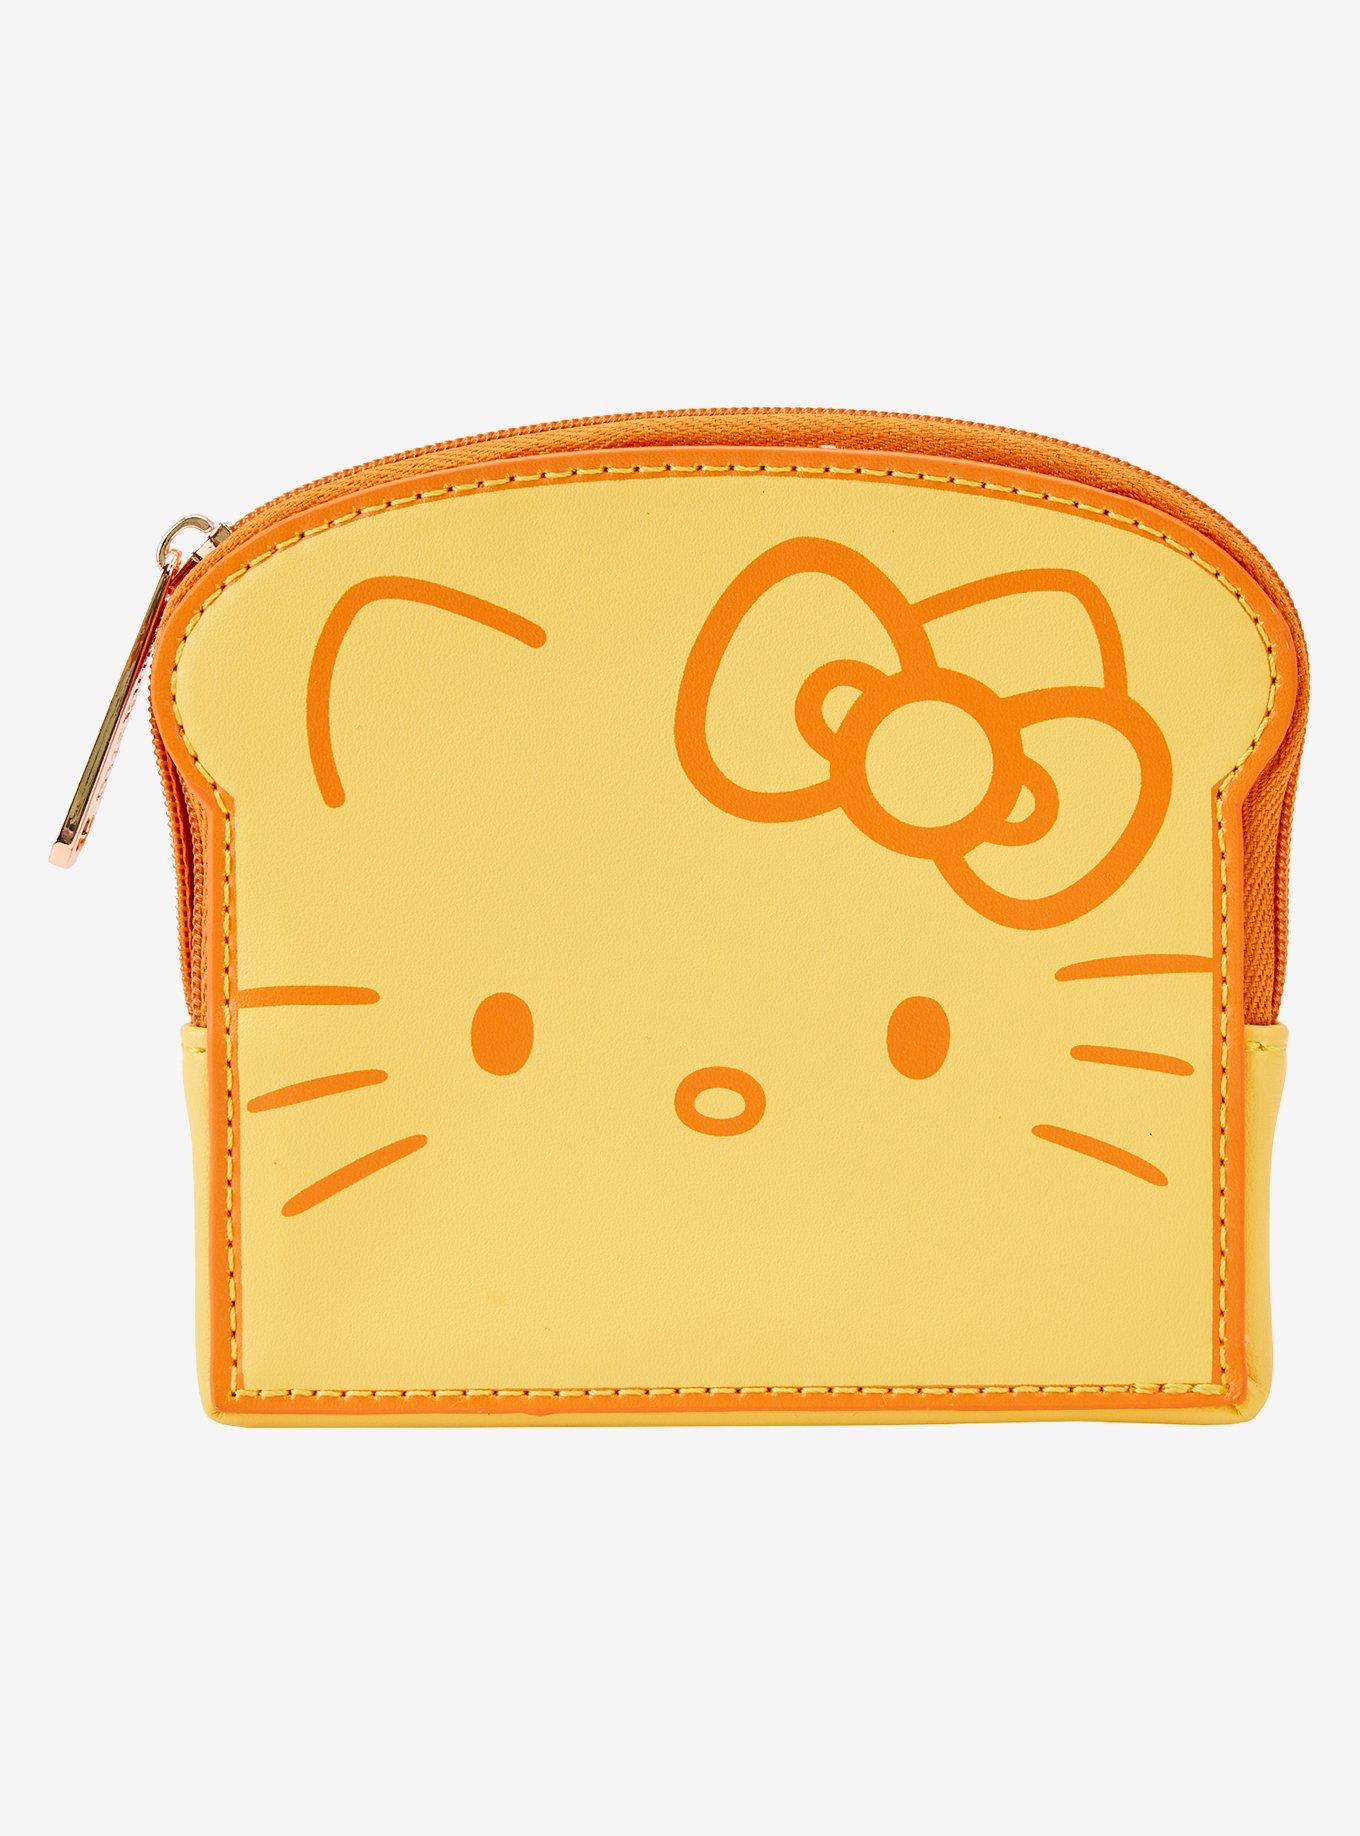 Sanrio Hello Kitty Breakfast Toaster Cross Body Loungefly Bag